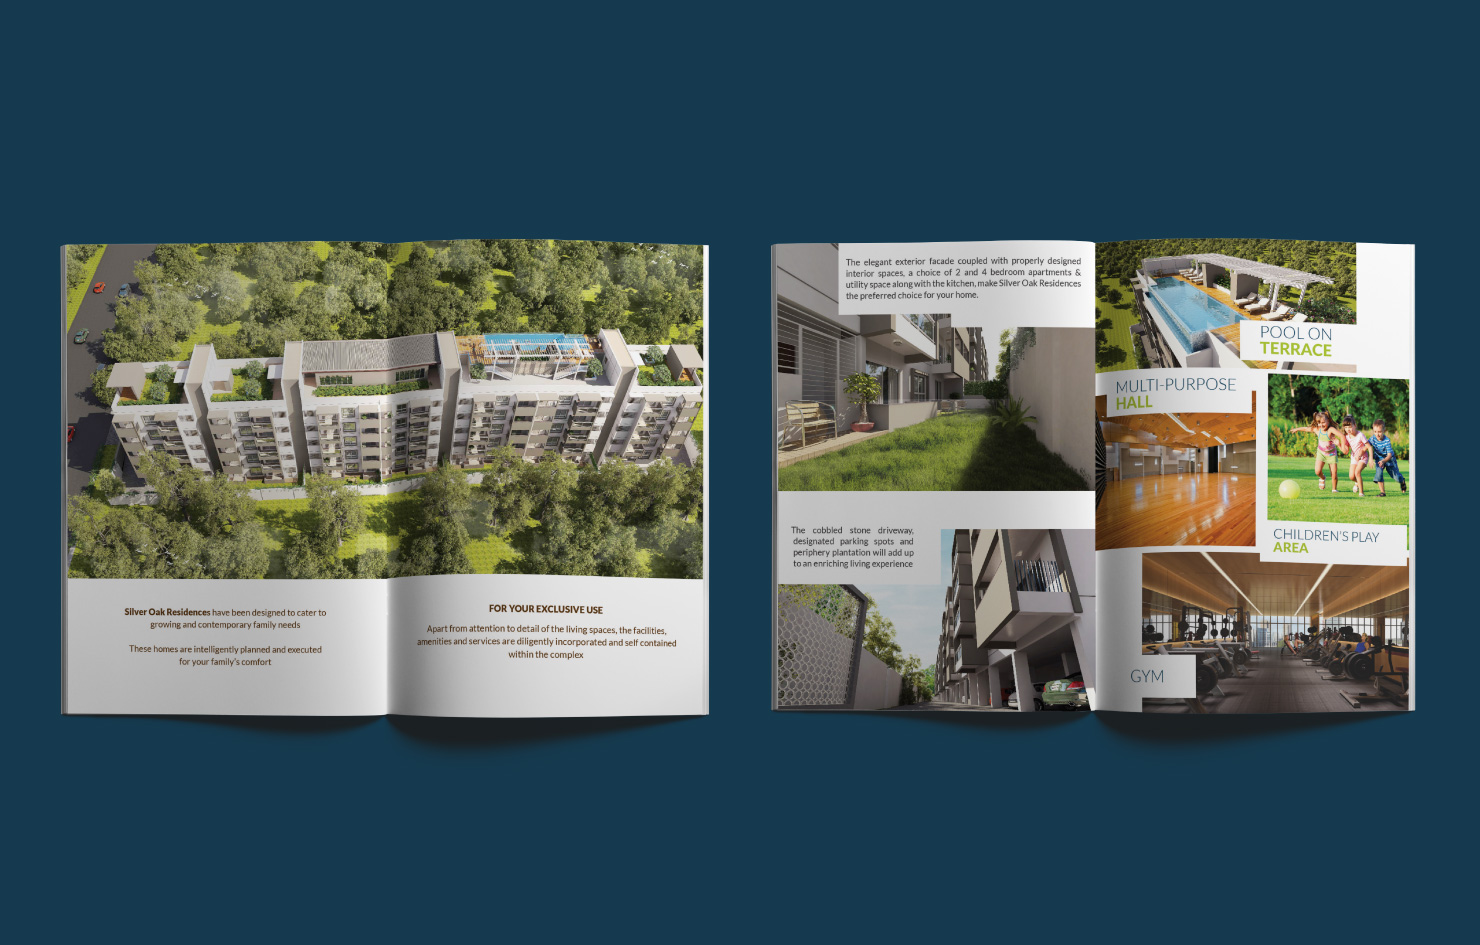 Silver Oak Residencies- A premium apartments in Banglore , Communication design created by Devolv Studio